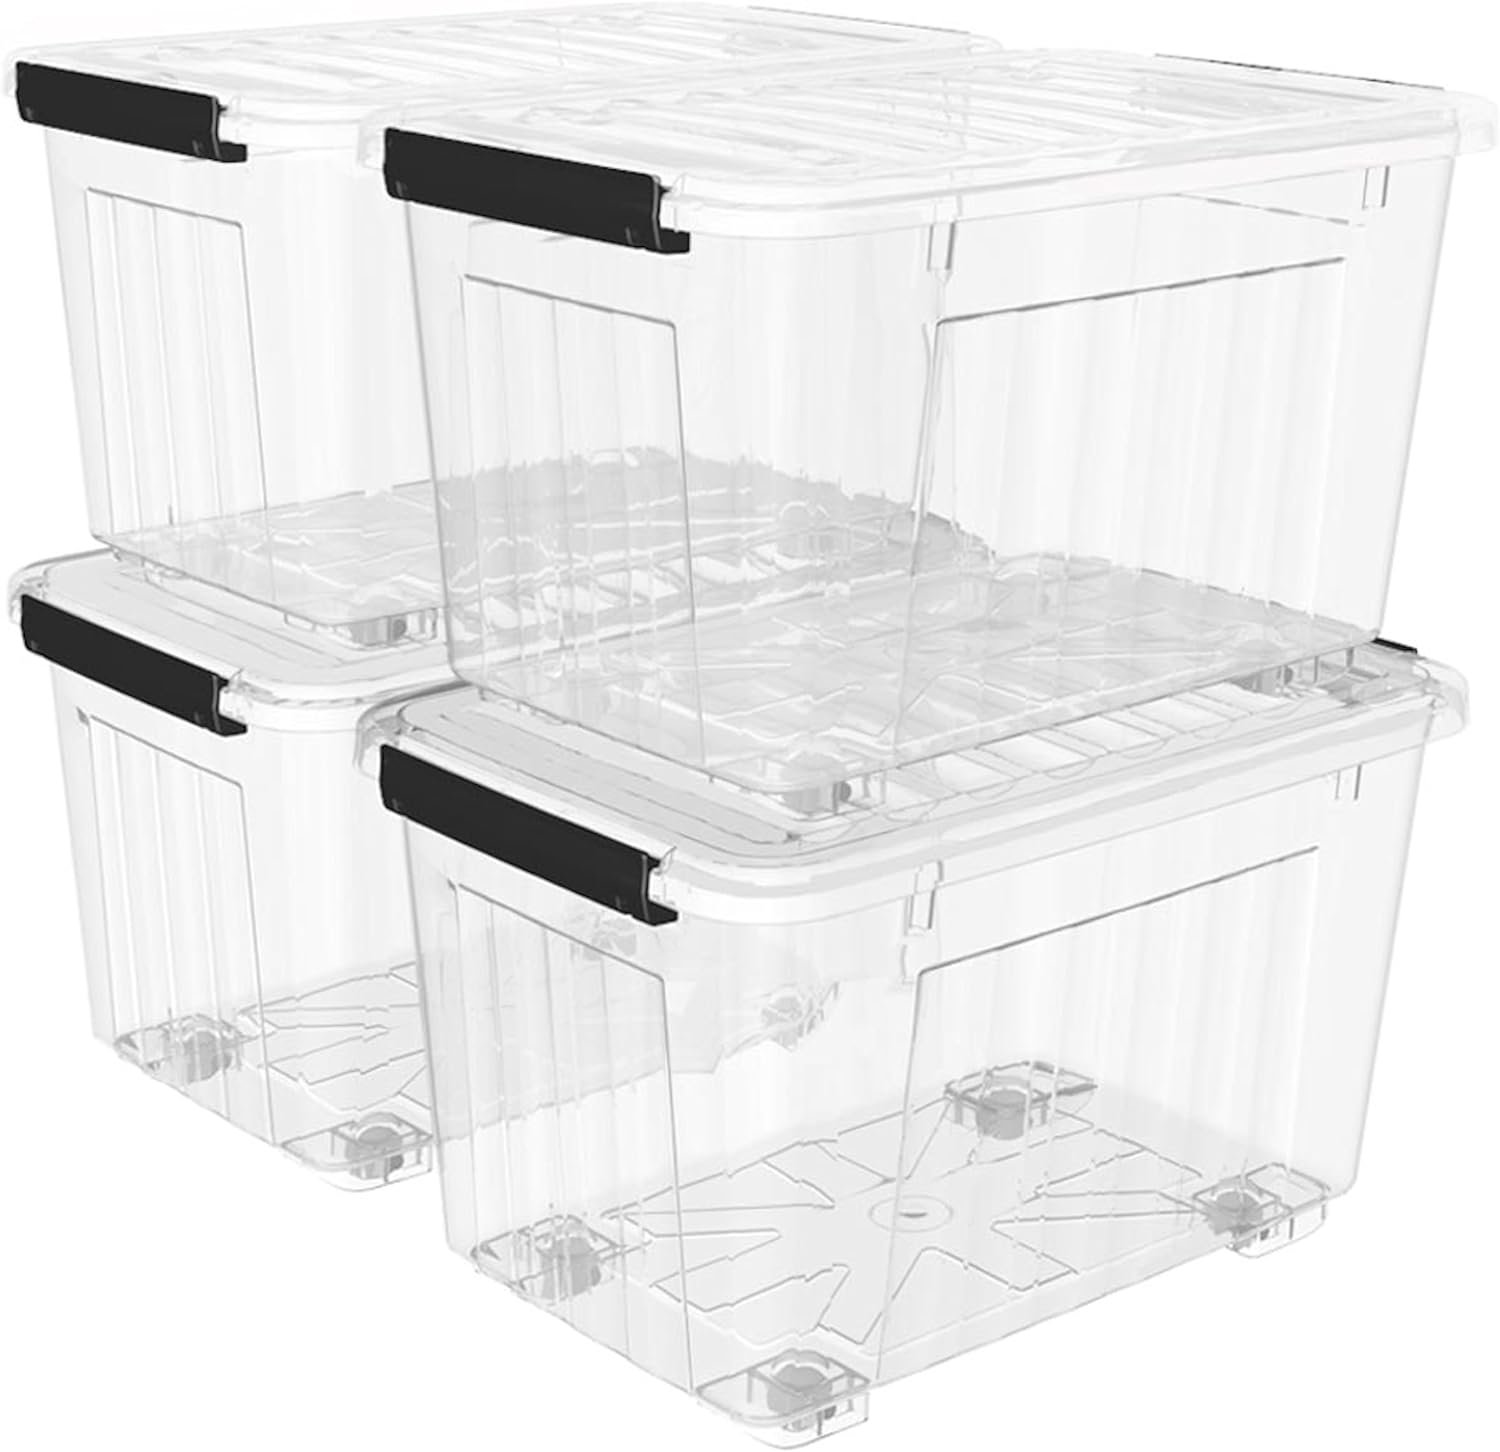 Plastic Storage Bin Box Review